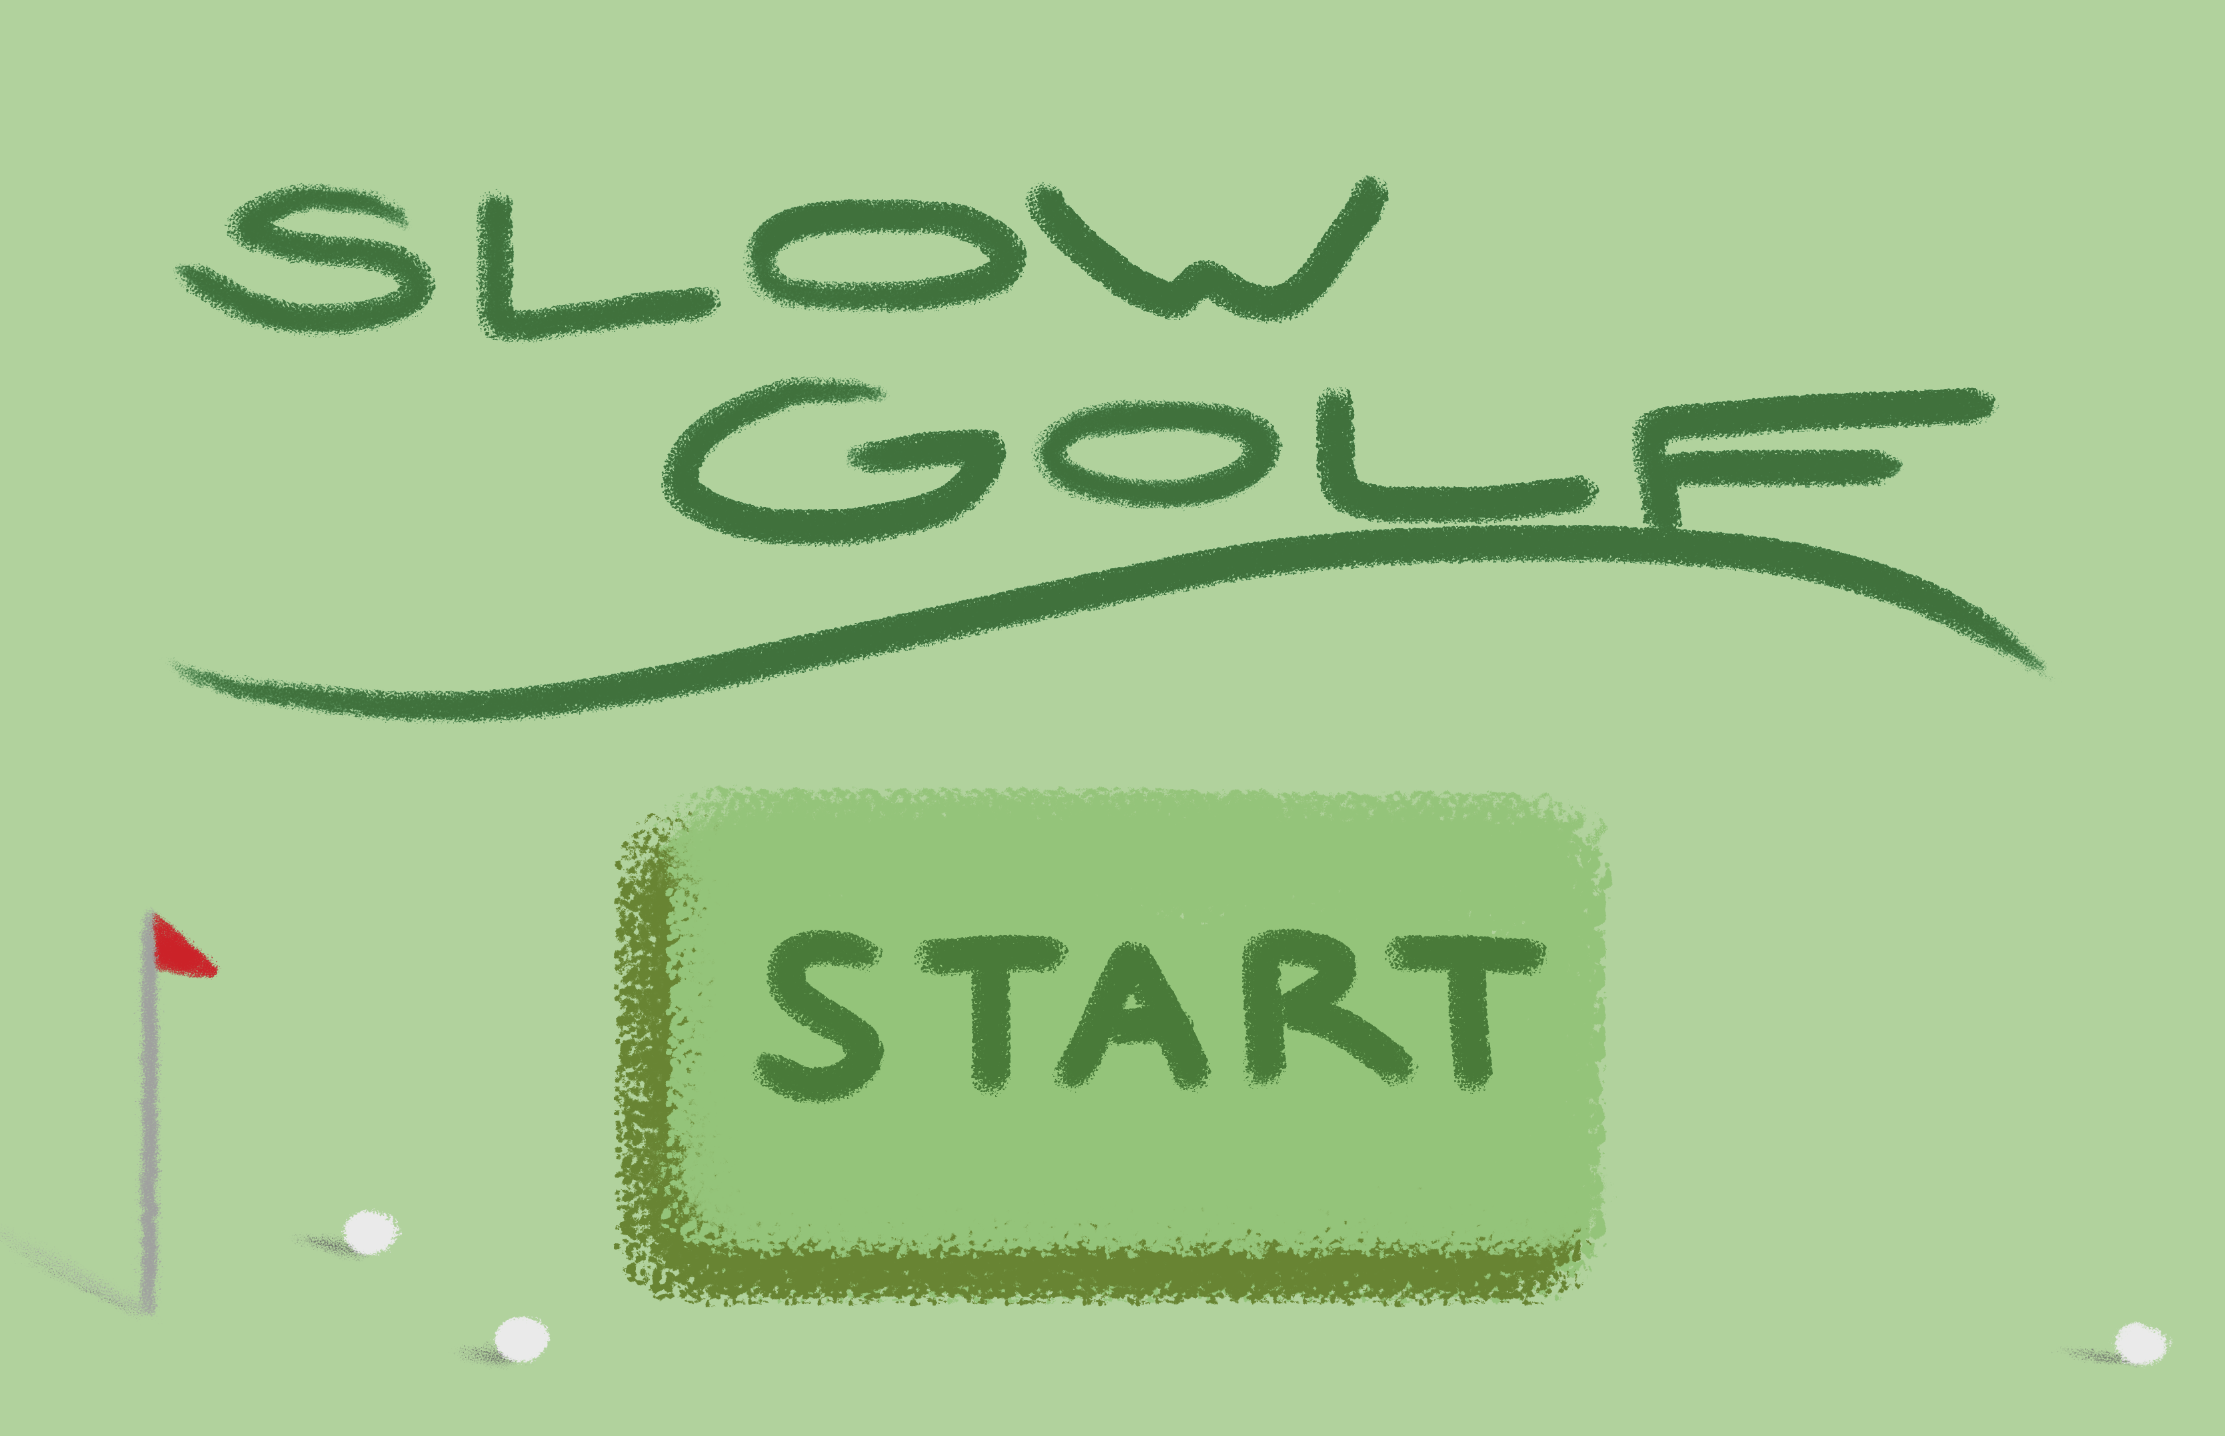 Slow Golf (super slow i swear)